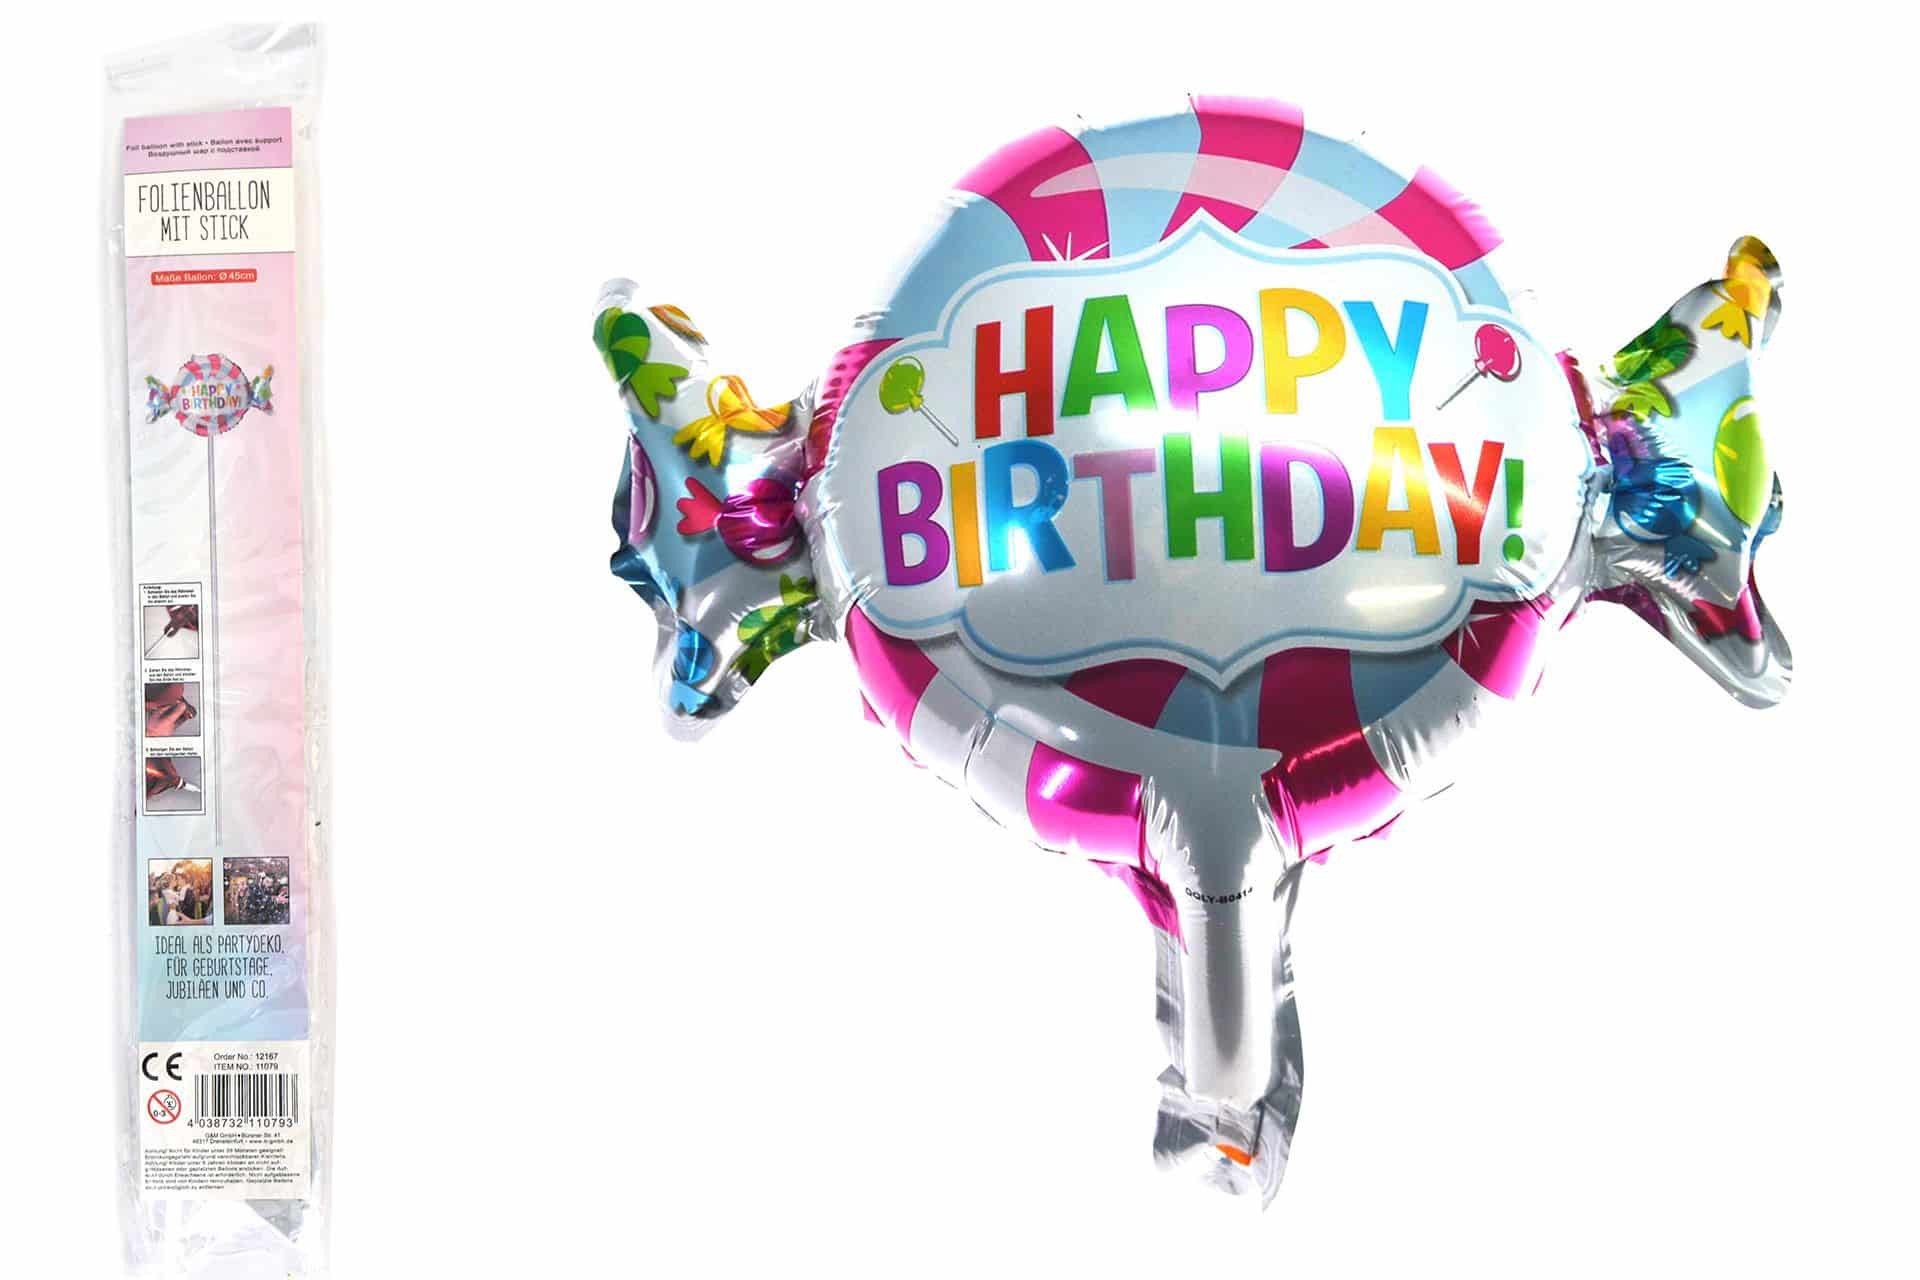 Folienballon mit Stick "Happy Birthday" Bonbon